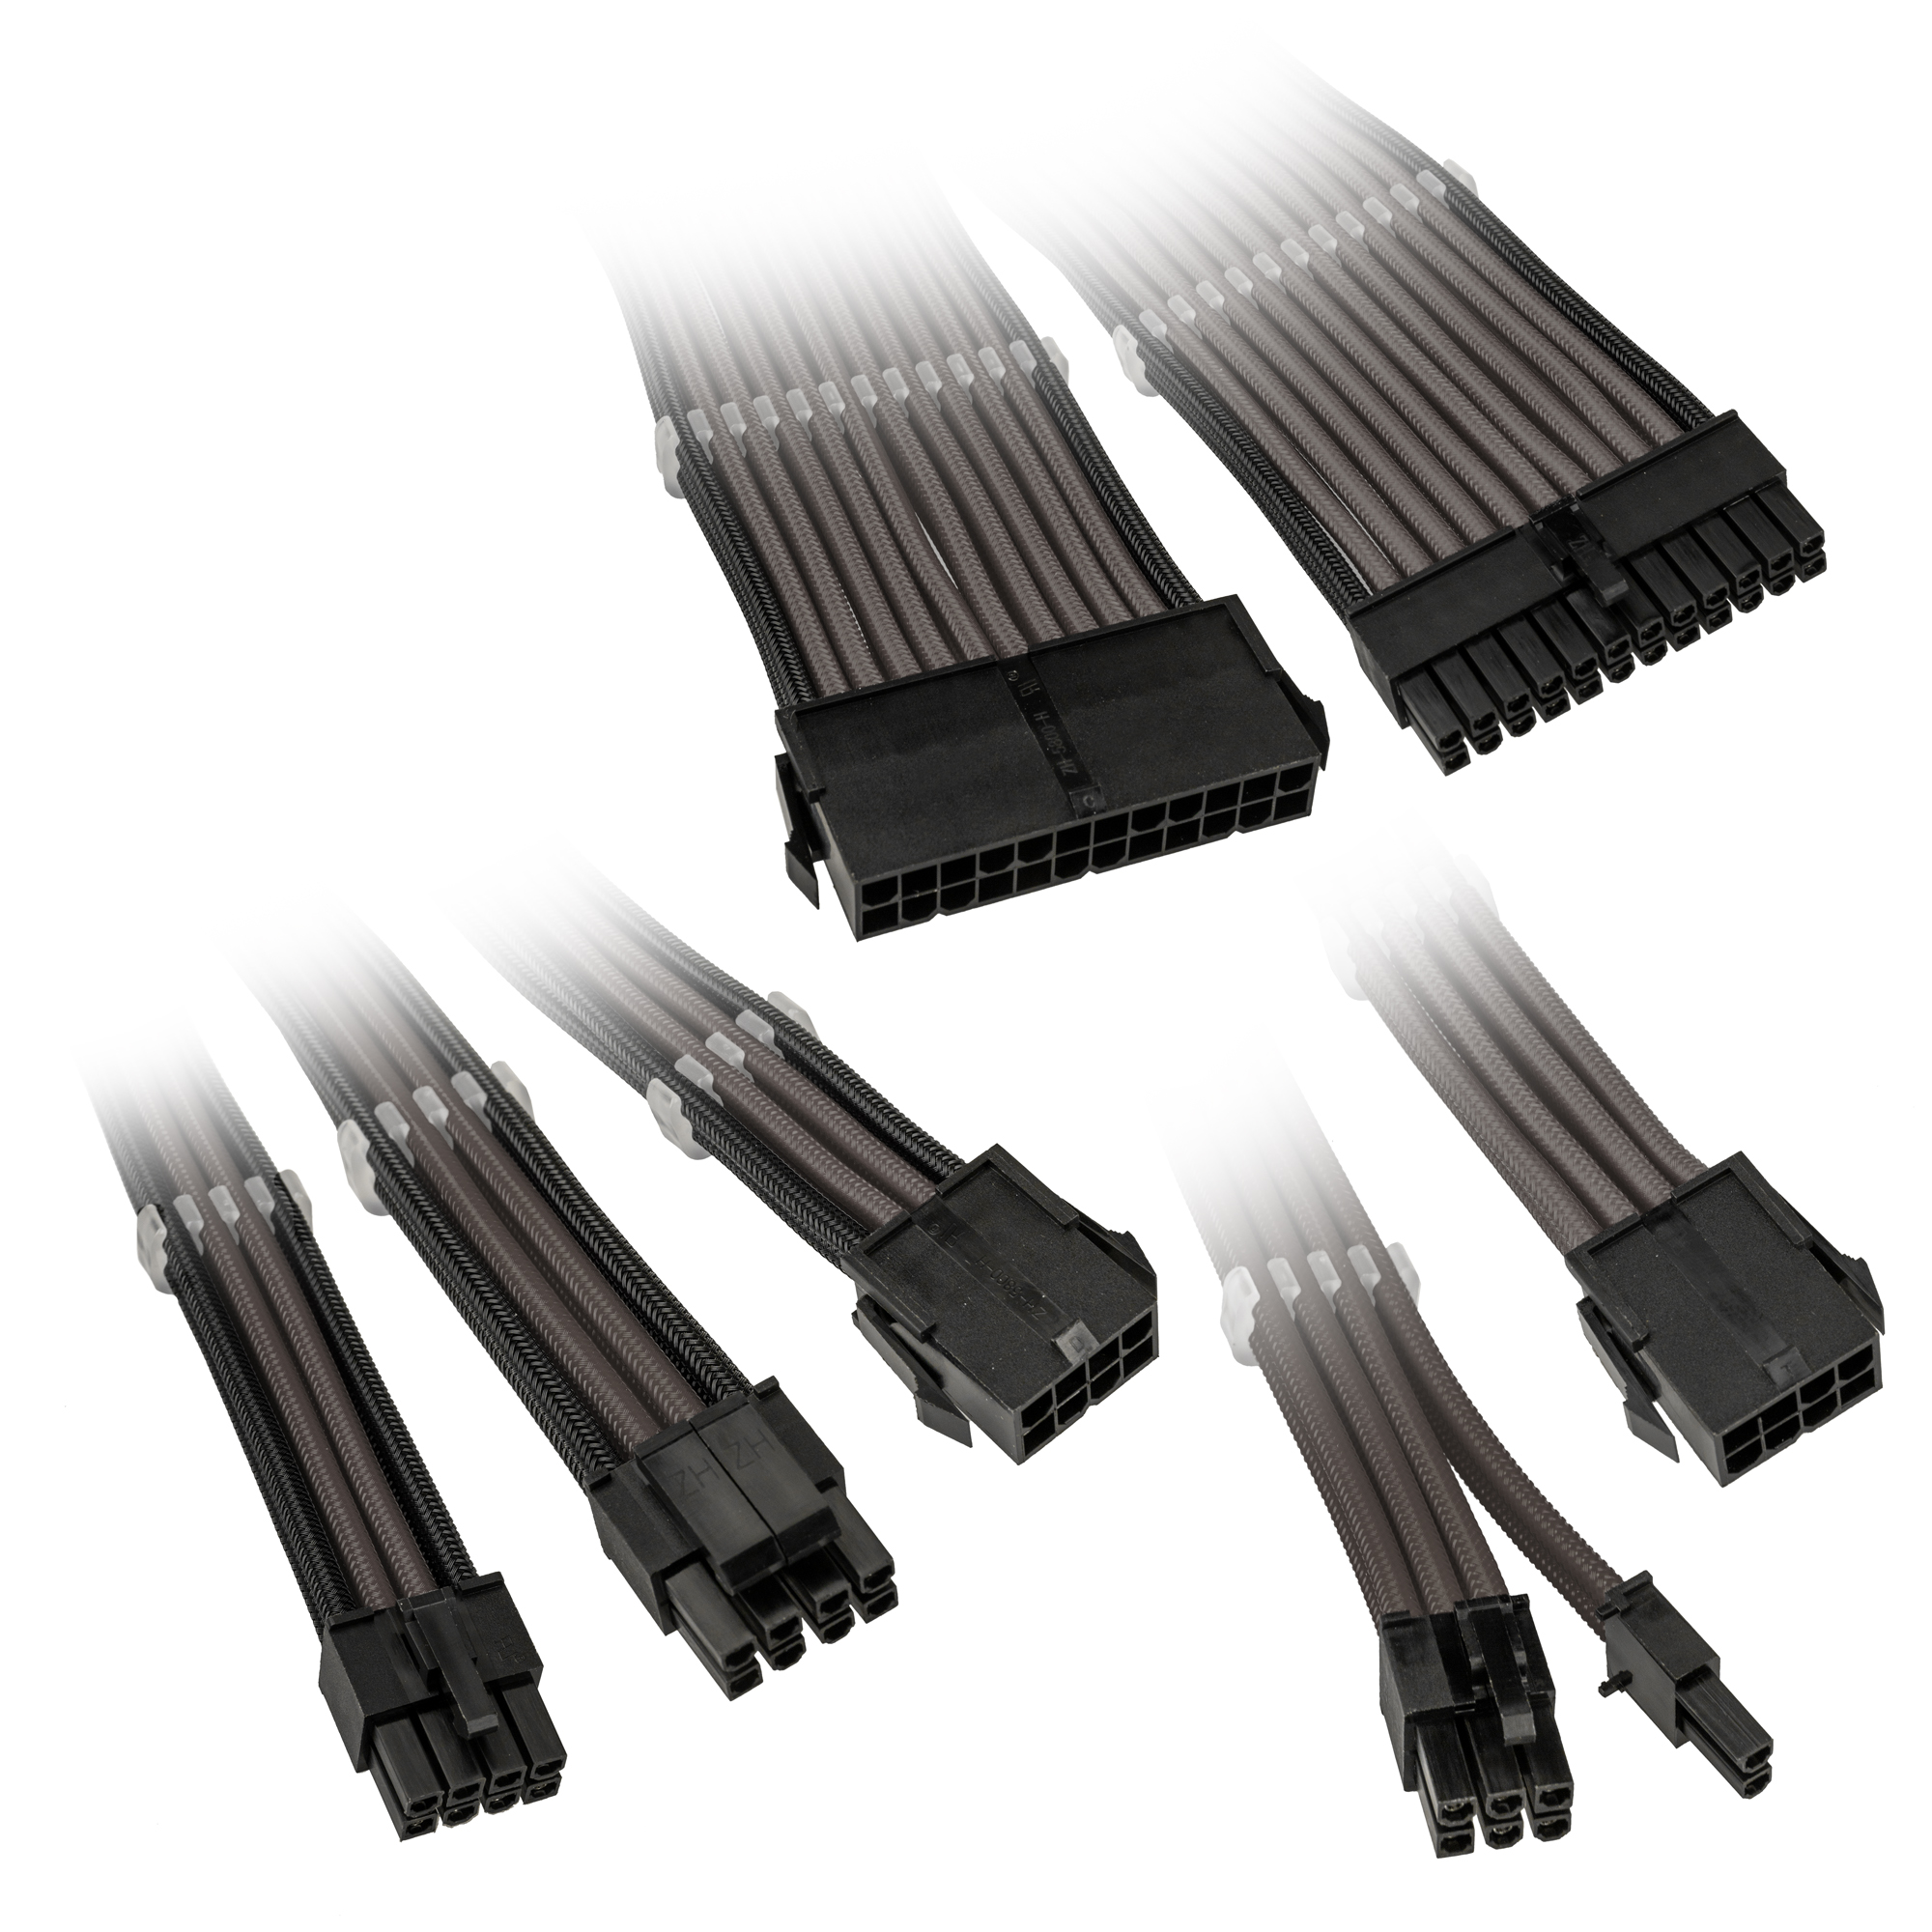 Kolink - Kolink Core Adept Braided Cable Extension Kit - Gunmetal Grey